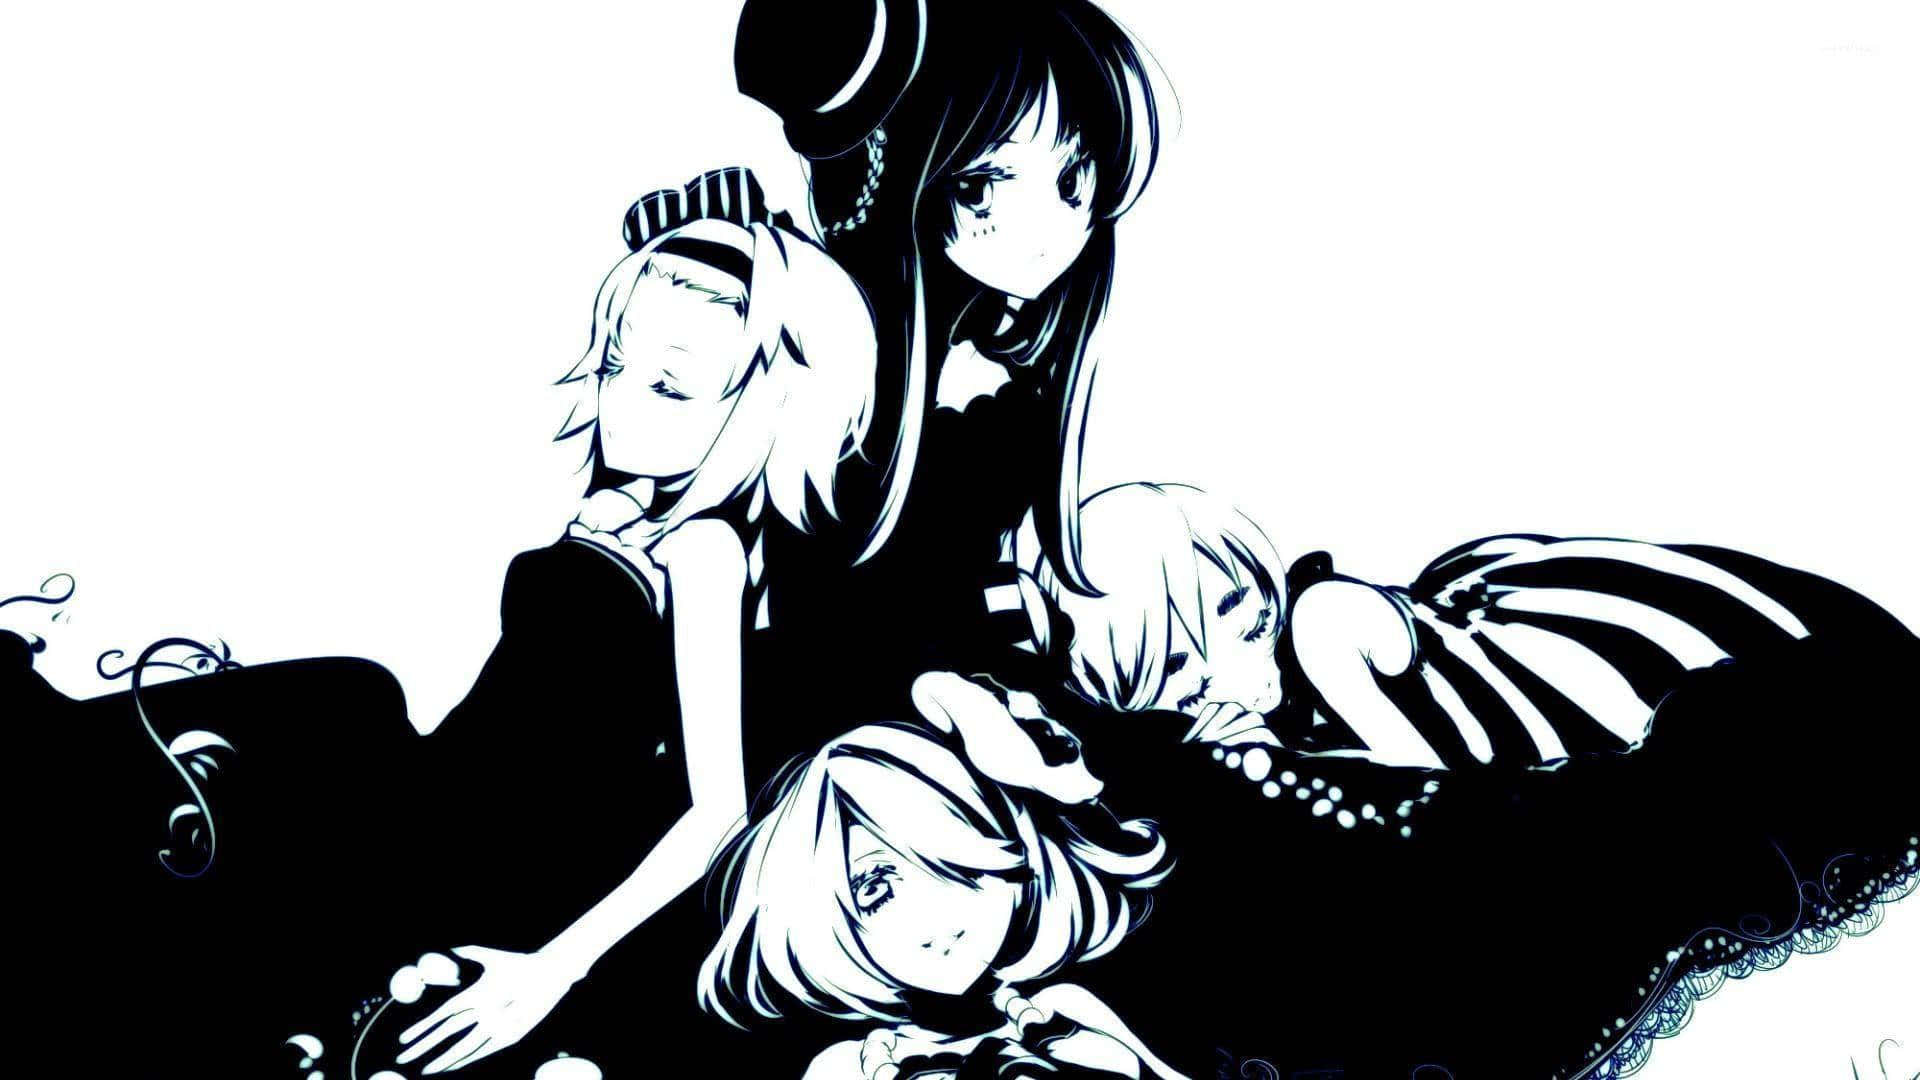 Captivating Black and White Anime Wallpaper